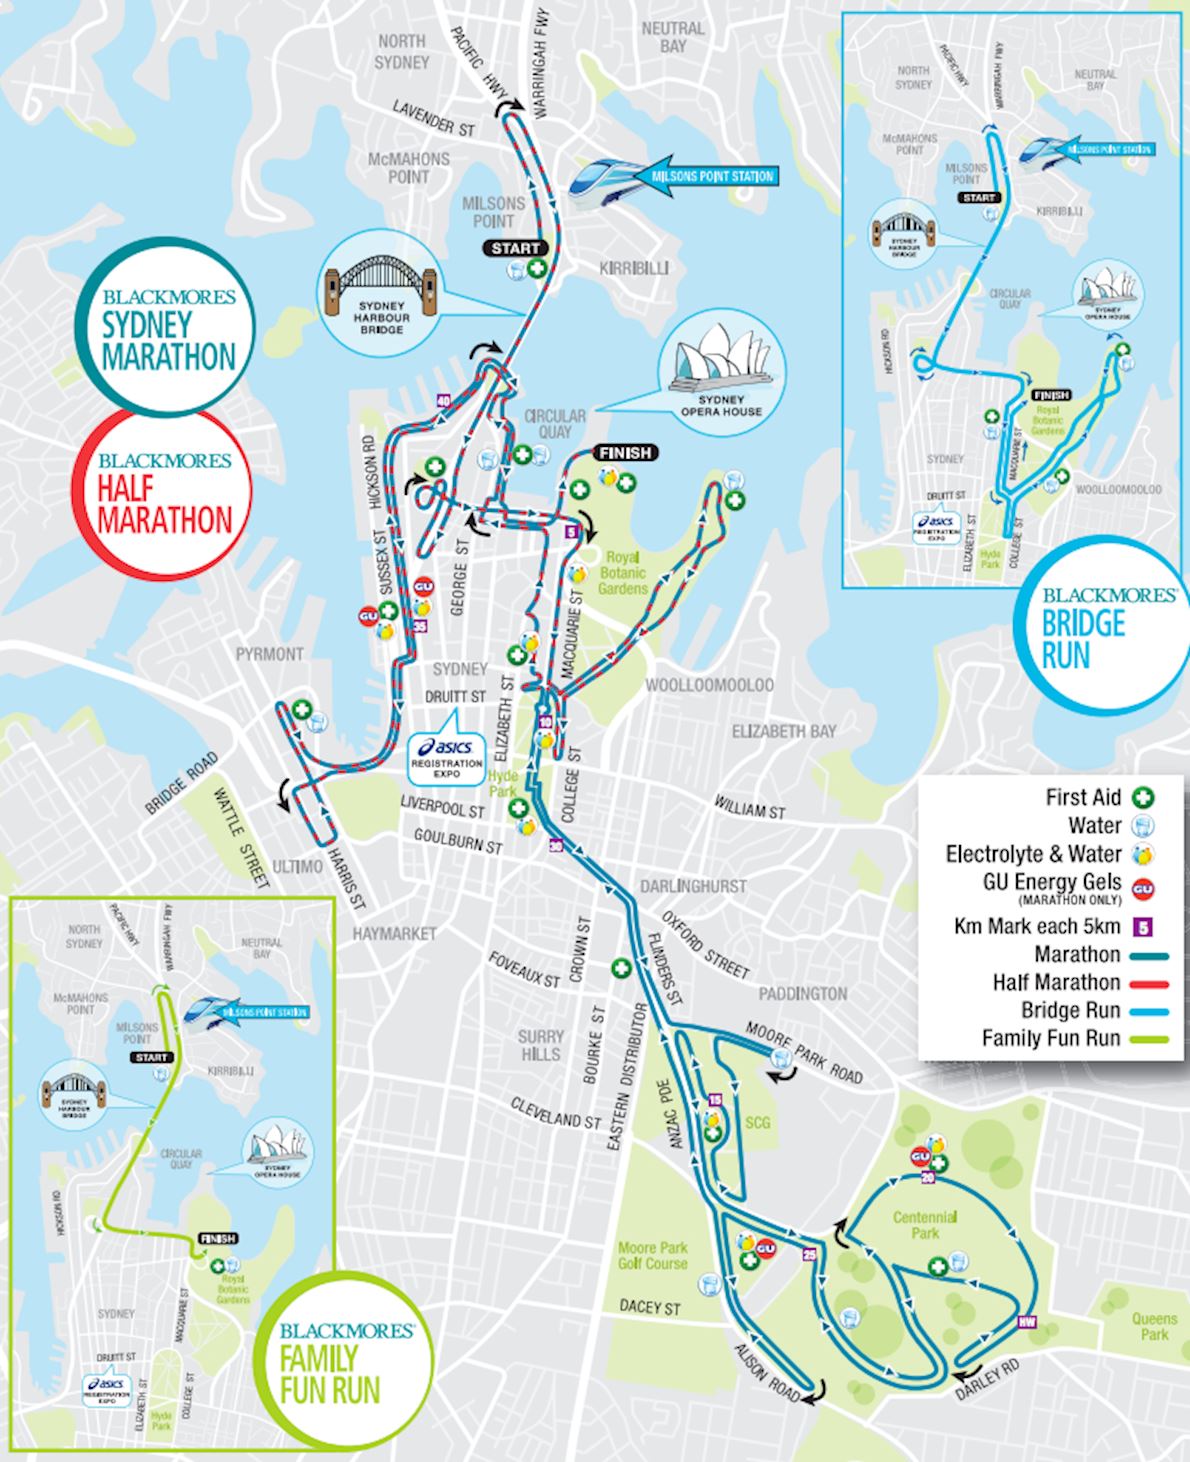 Blackmores Sydney Running Festival, Sep 18 2022 World's Marathons